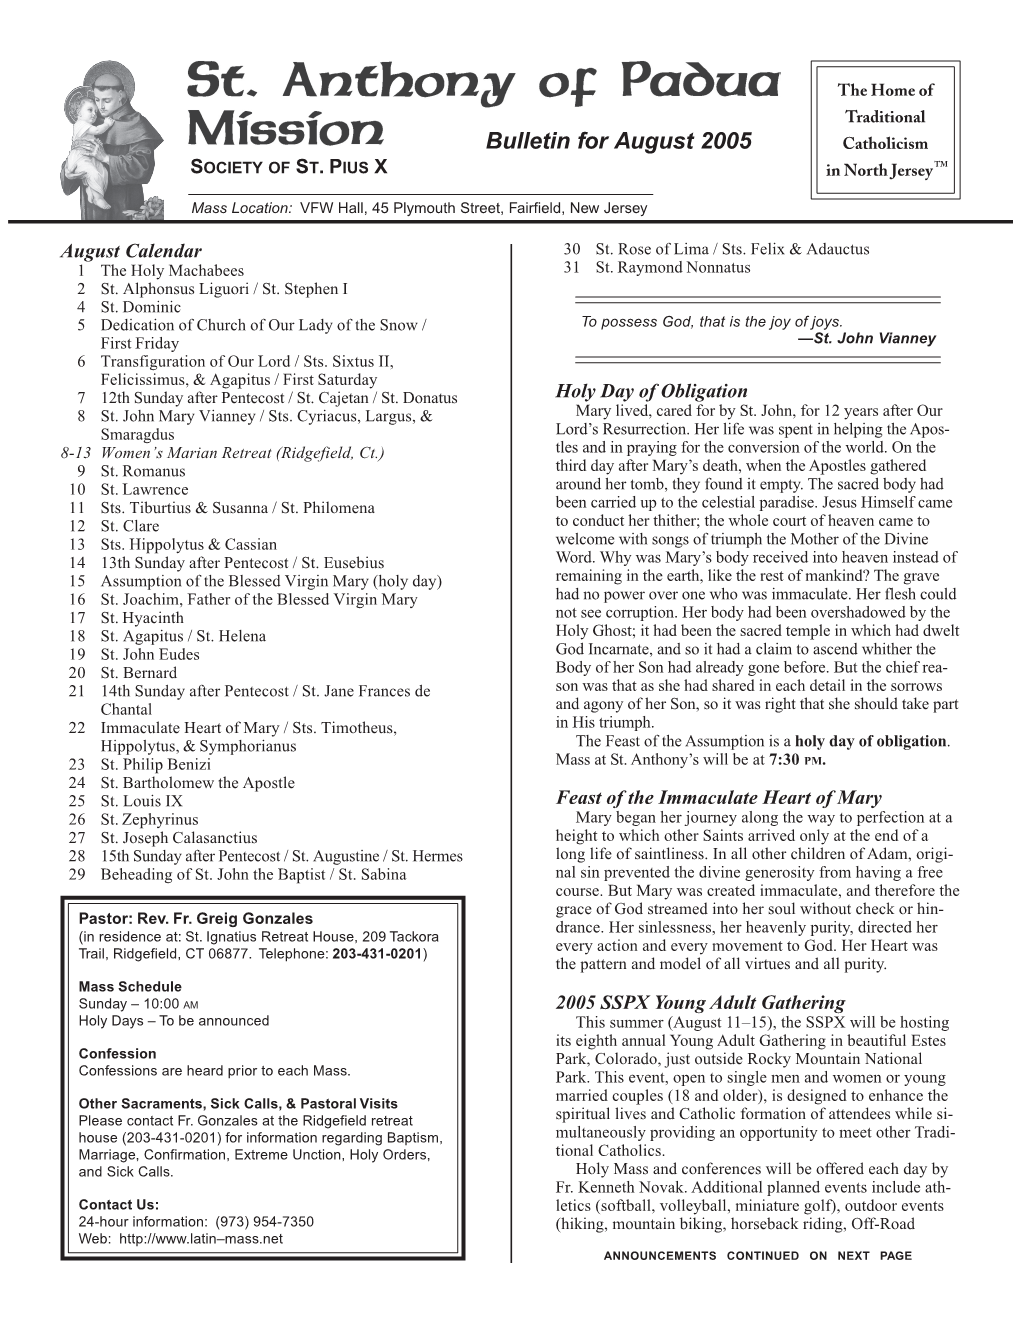 August 2005 Bulletin